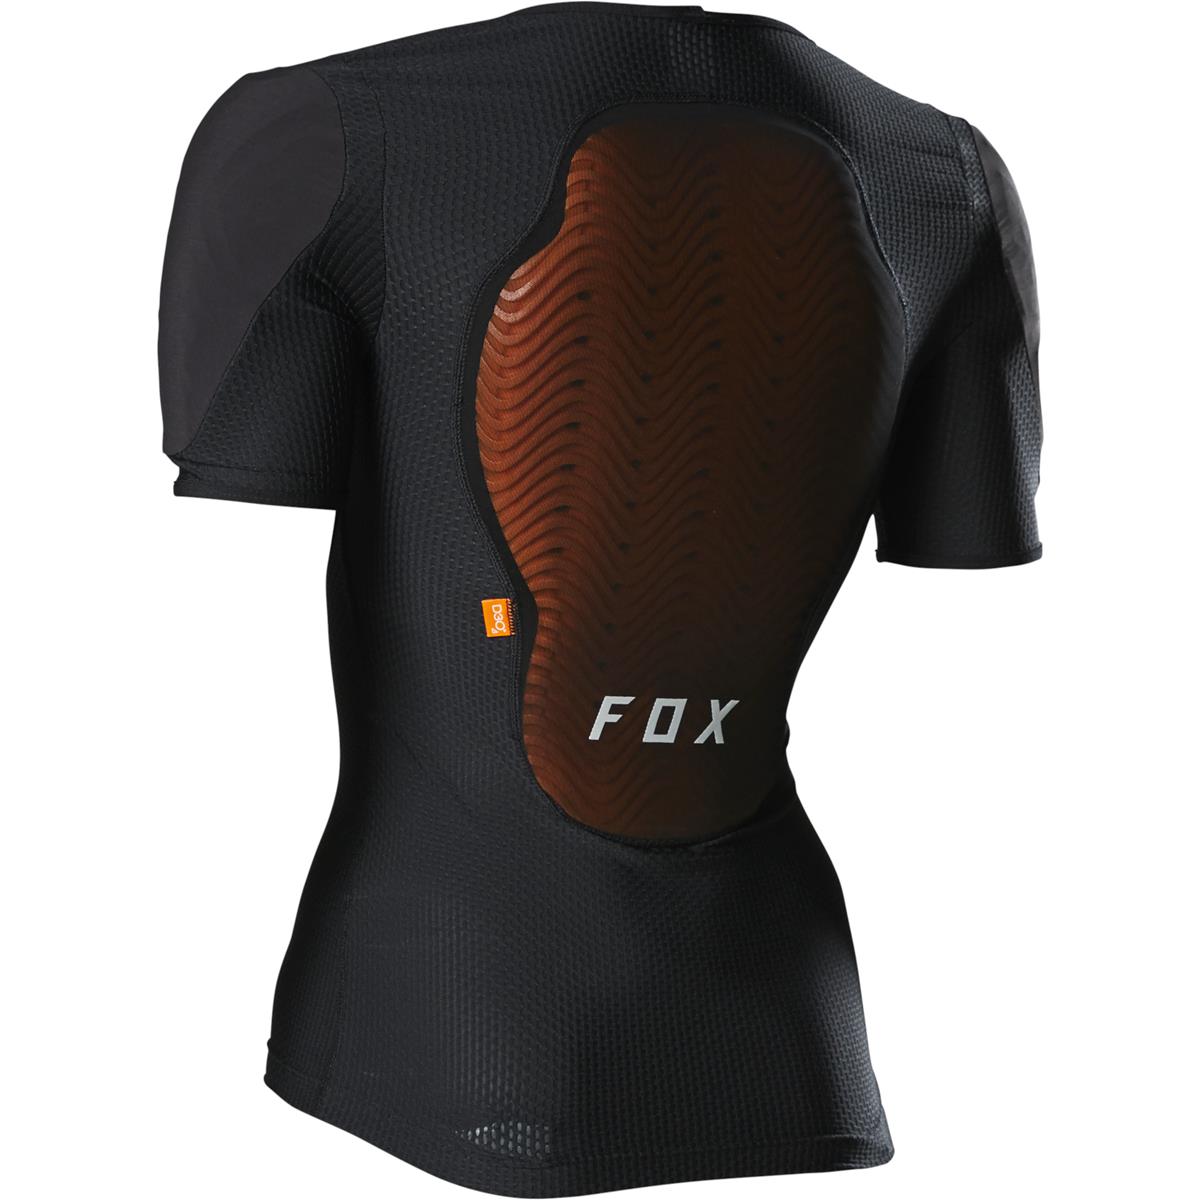 Fox Girls Protector Short Maciag Offroad Shirt Baseframe Pro Black | Sleeve